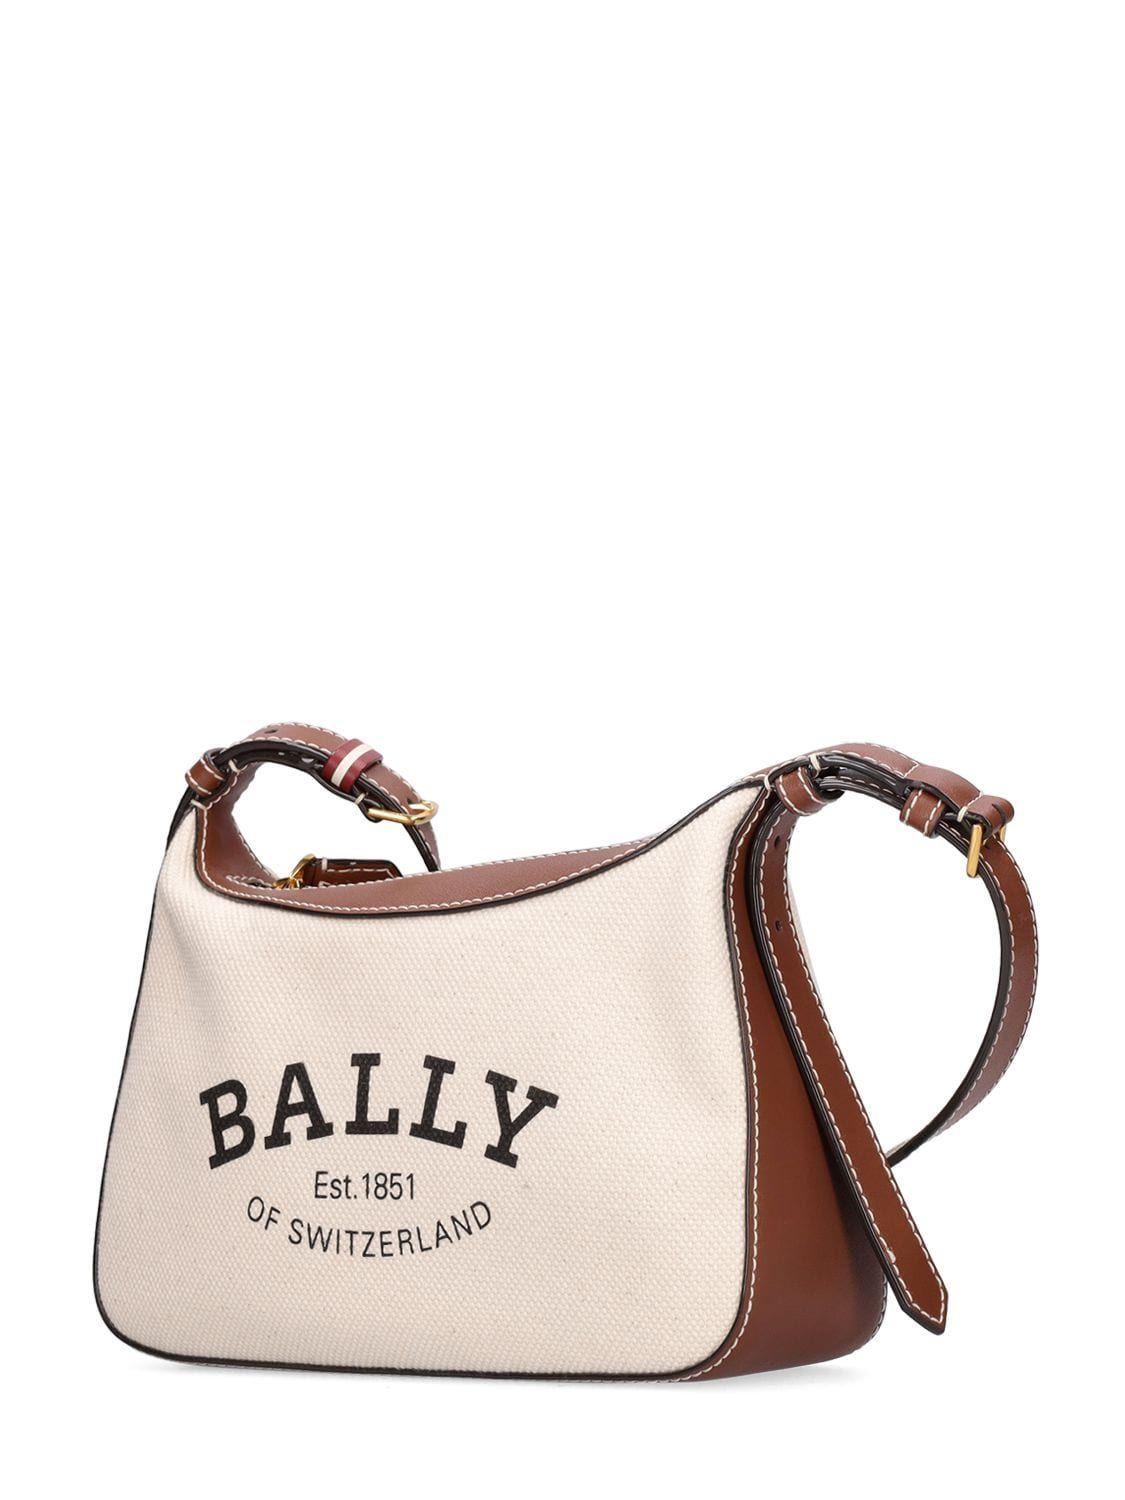 Bally Coralye.st Canvas & Leather Shoulder Bag in Natural